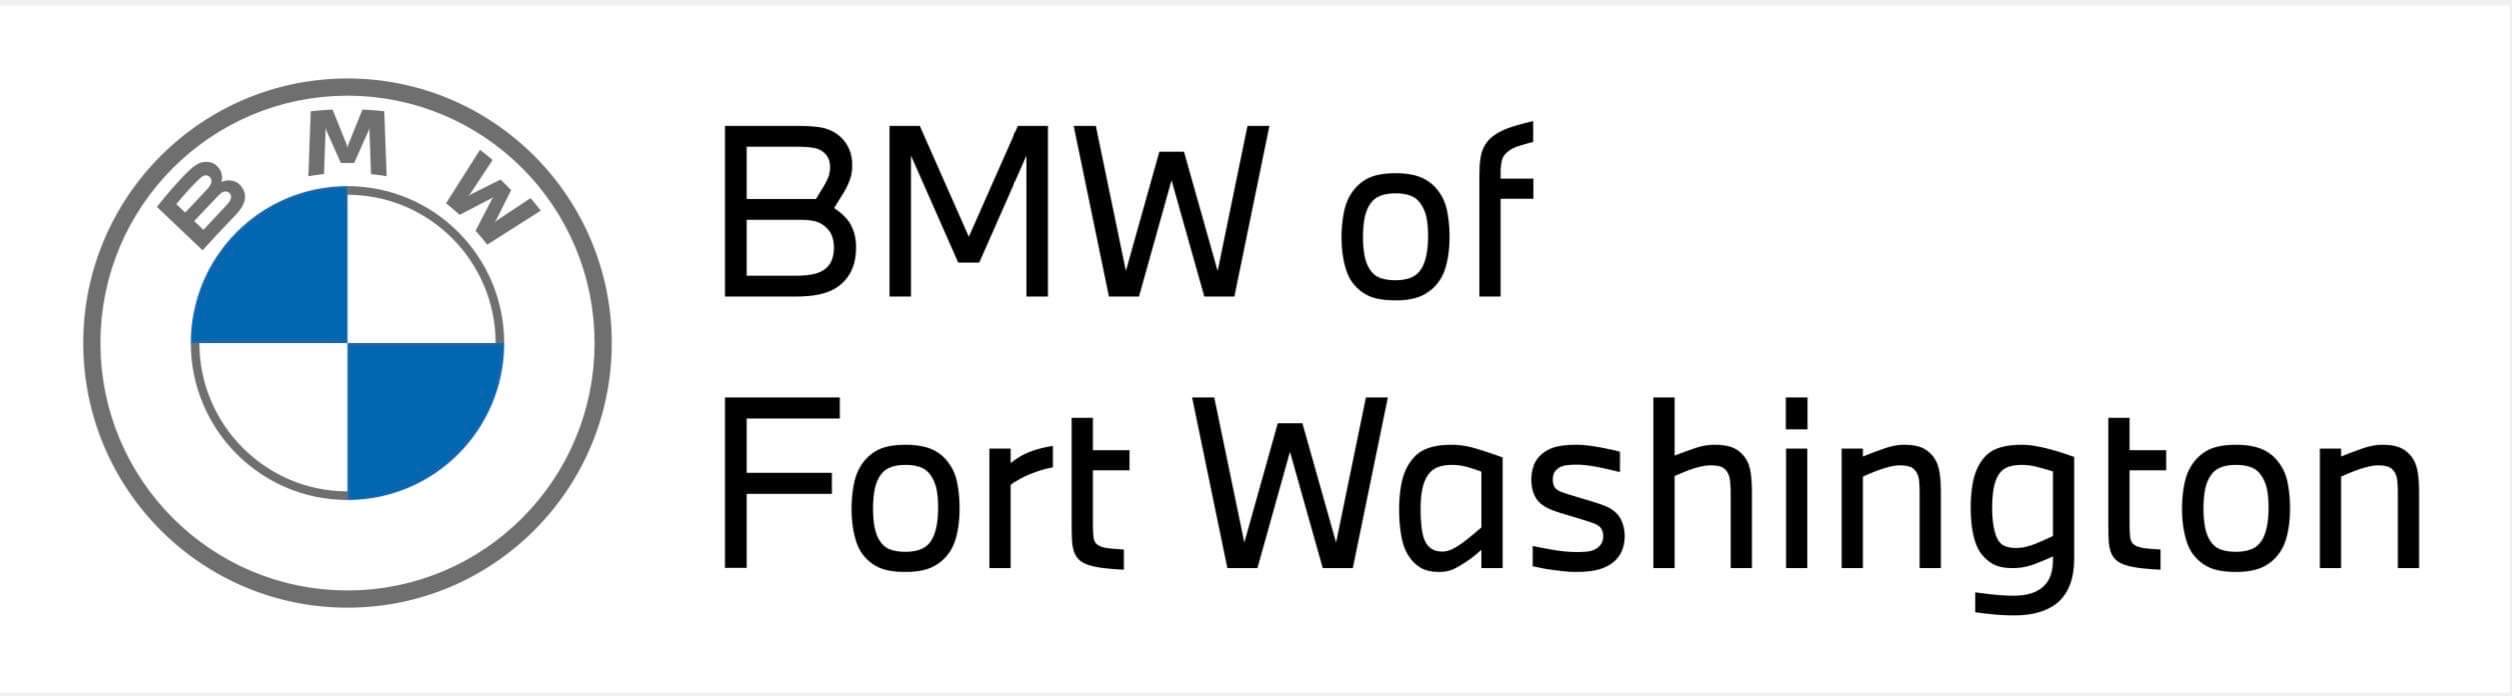 BMW Fort Washington